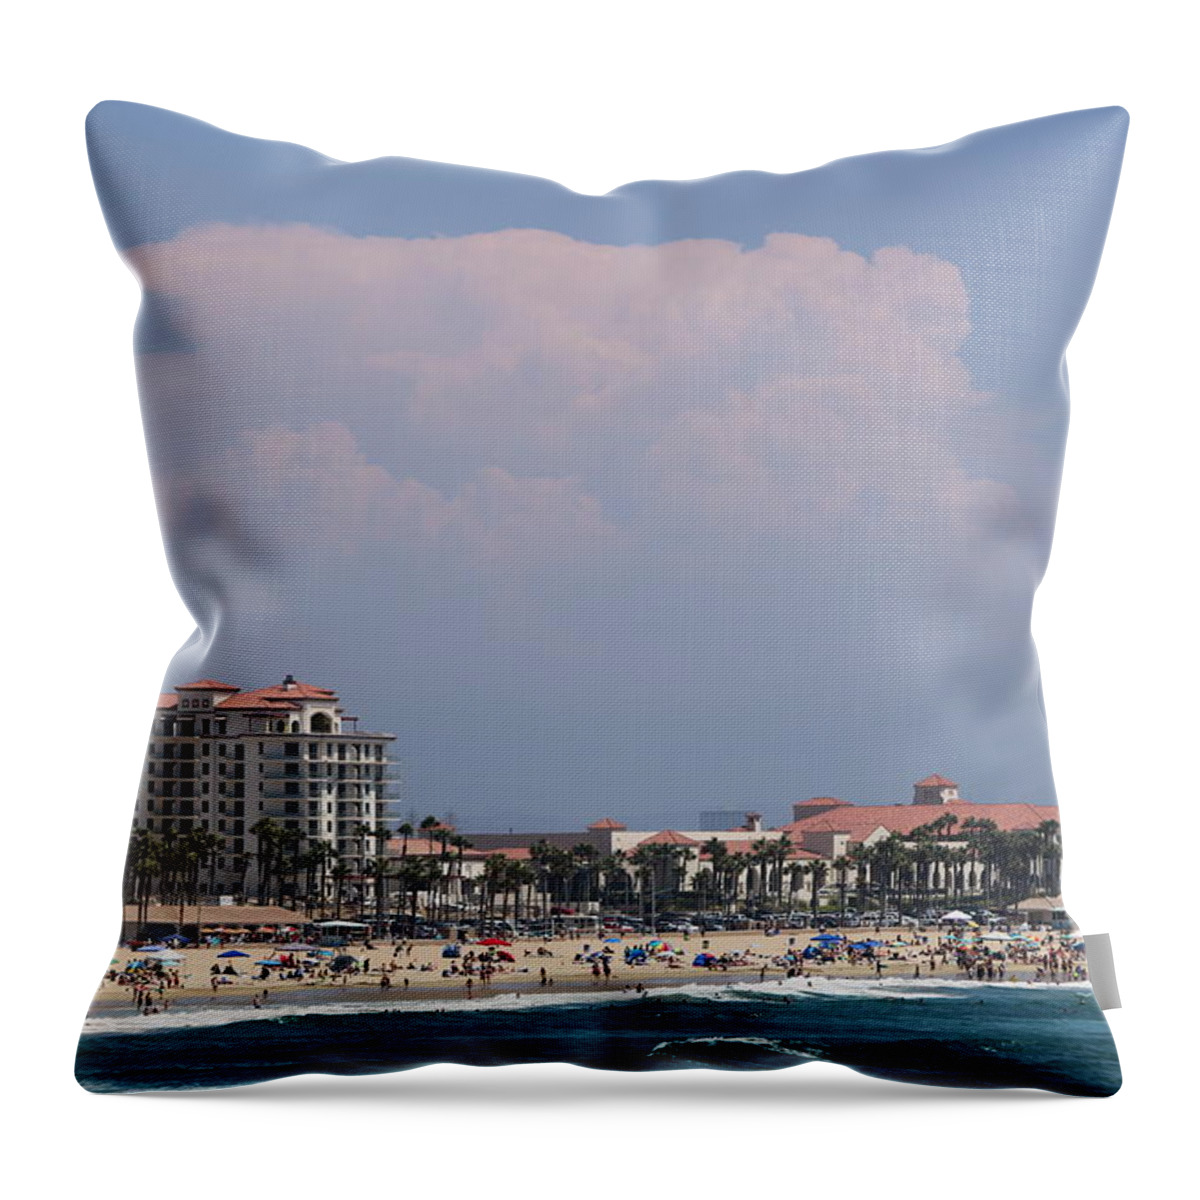 Huntington Beach California Throw Pillow featuring the photograph Enhanced Beach Scene at Huntington Beach California by Colleen Cornelius